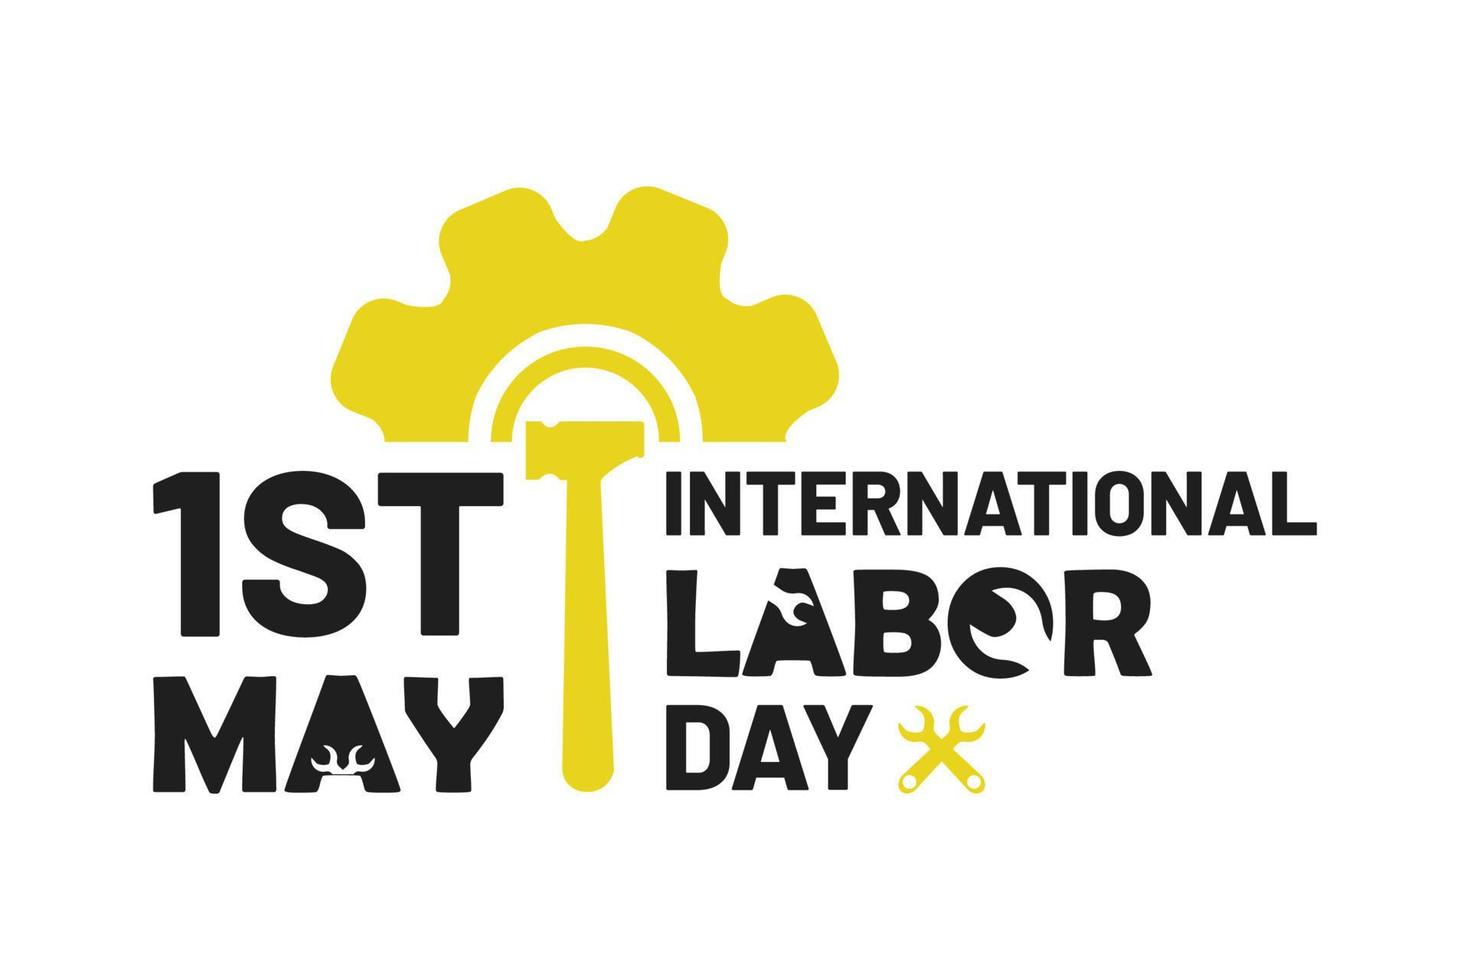 International labor day design vector. 1st May day. International workers day vector